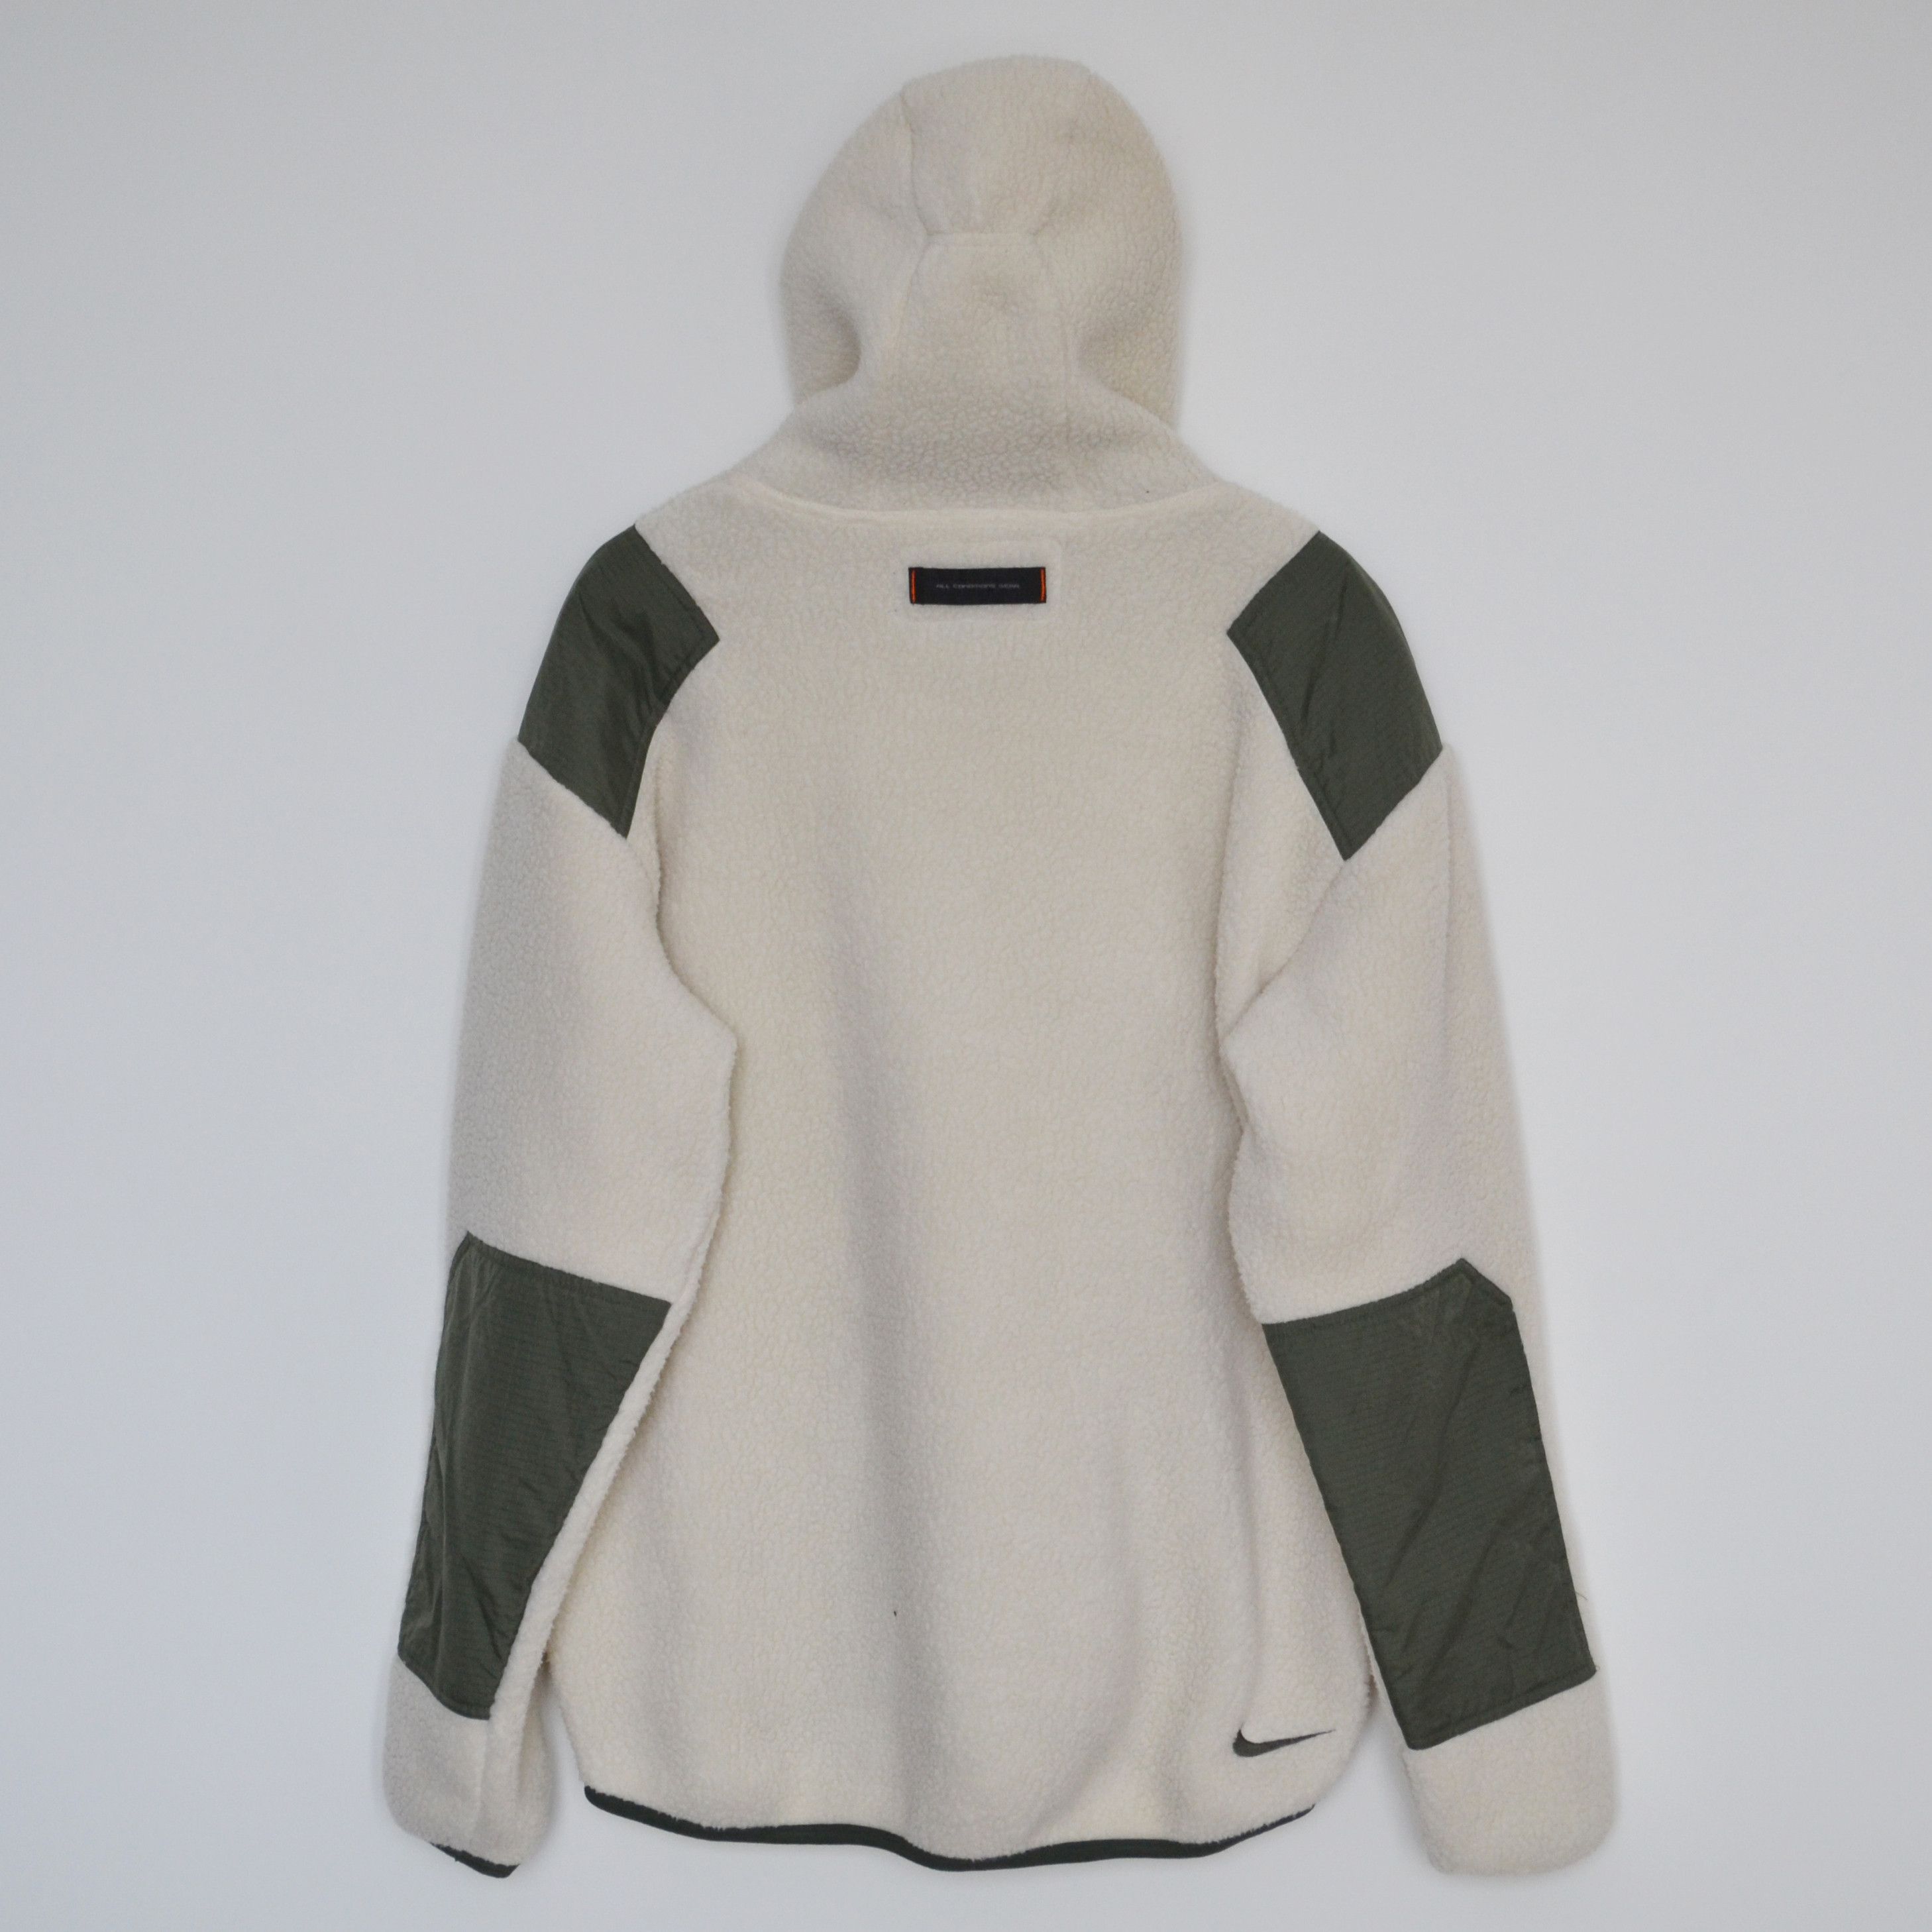 Nike ninja mask fleece sherpa anorak hoodie with nylon details Size US L / EU 52-54 / 3 - 2 Preview